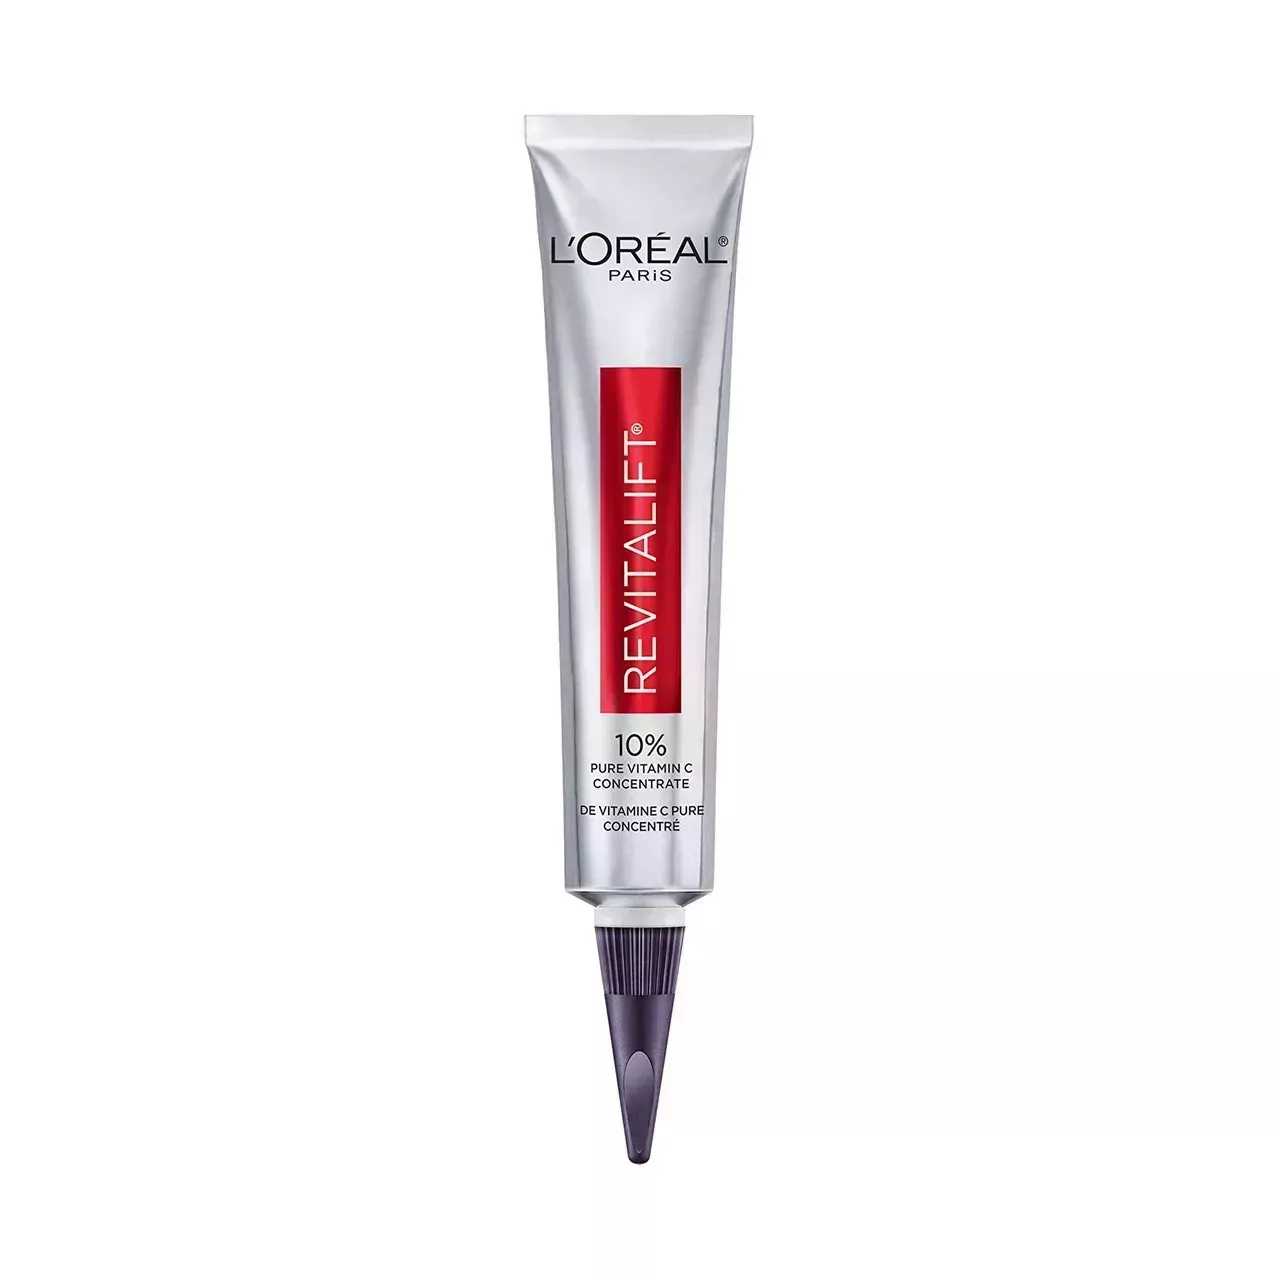 L'Oréal Paris Skincare 10% Pure Vitamin C Serum silver tube with dark purple pointed cap on white background